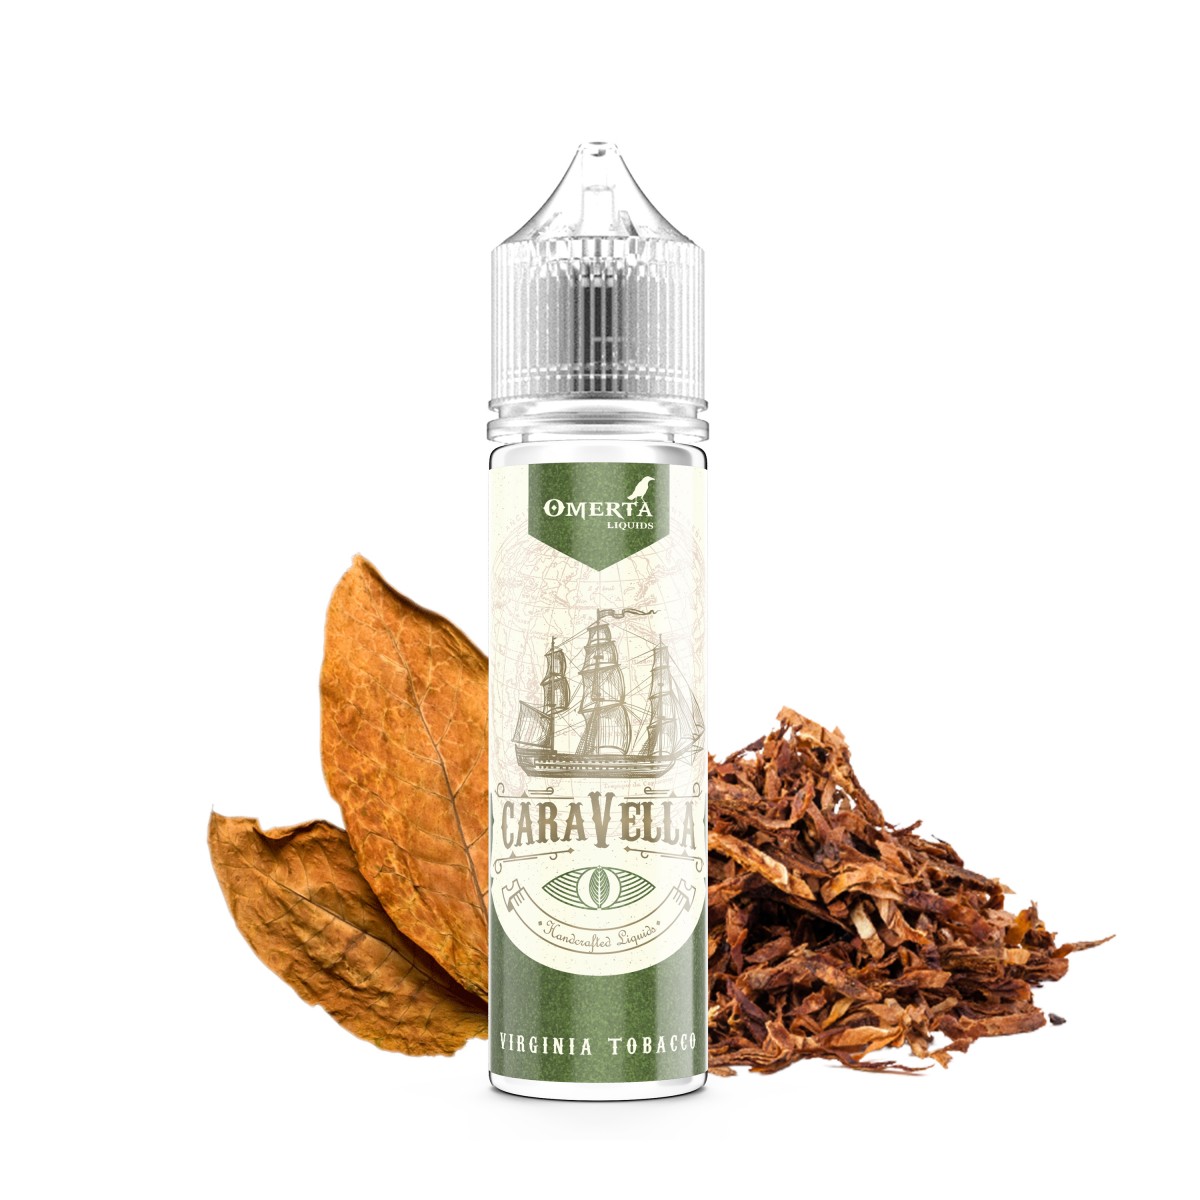 Caravella Virginia Tobacco 20ml Flavor WBF-1200×1200